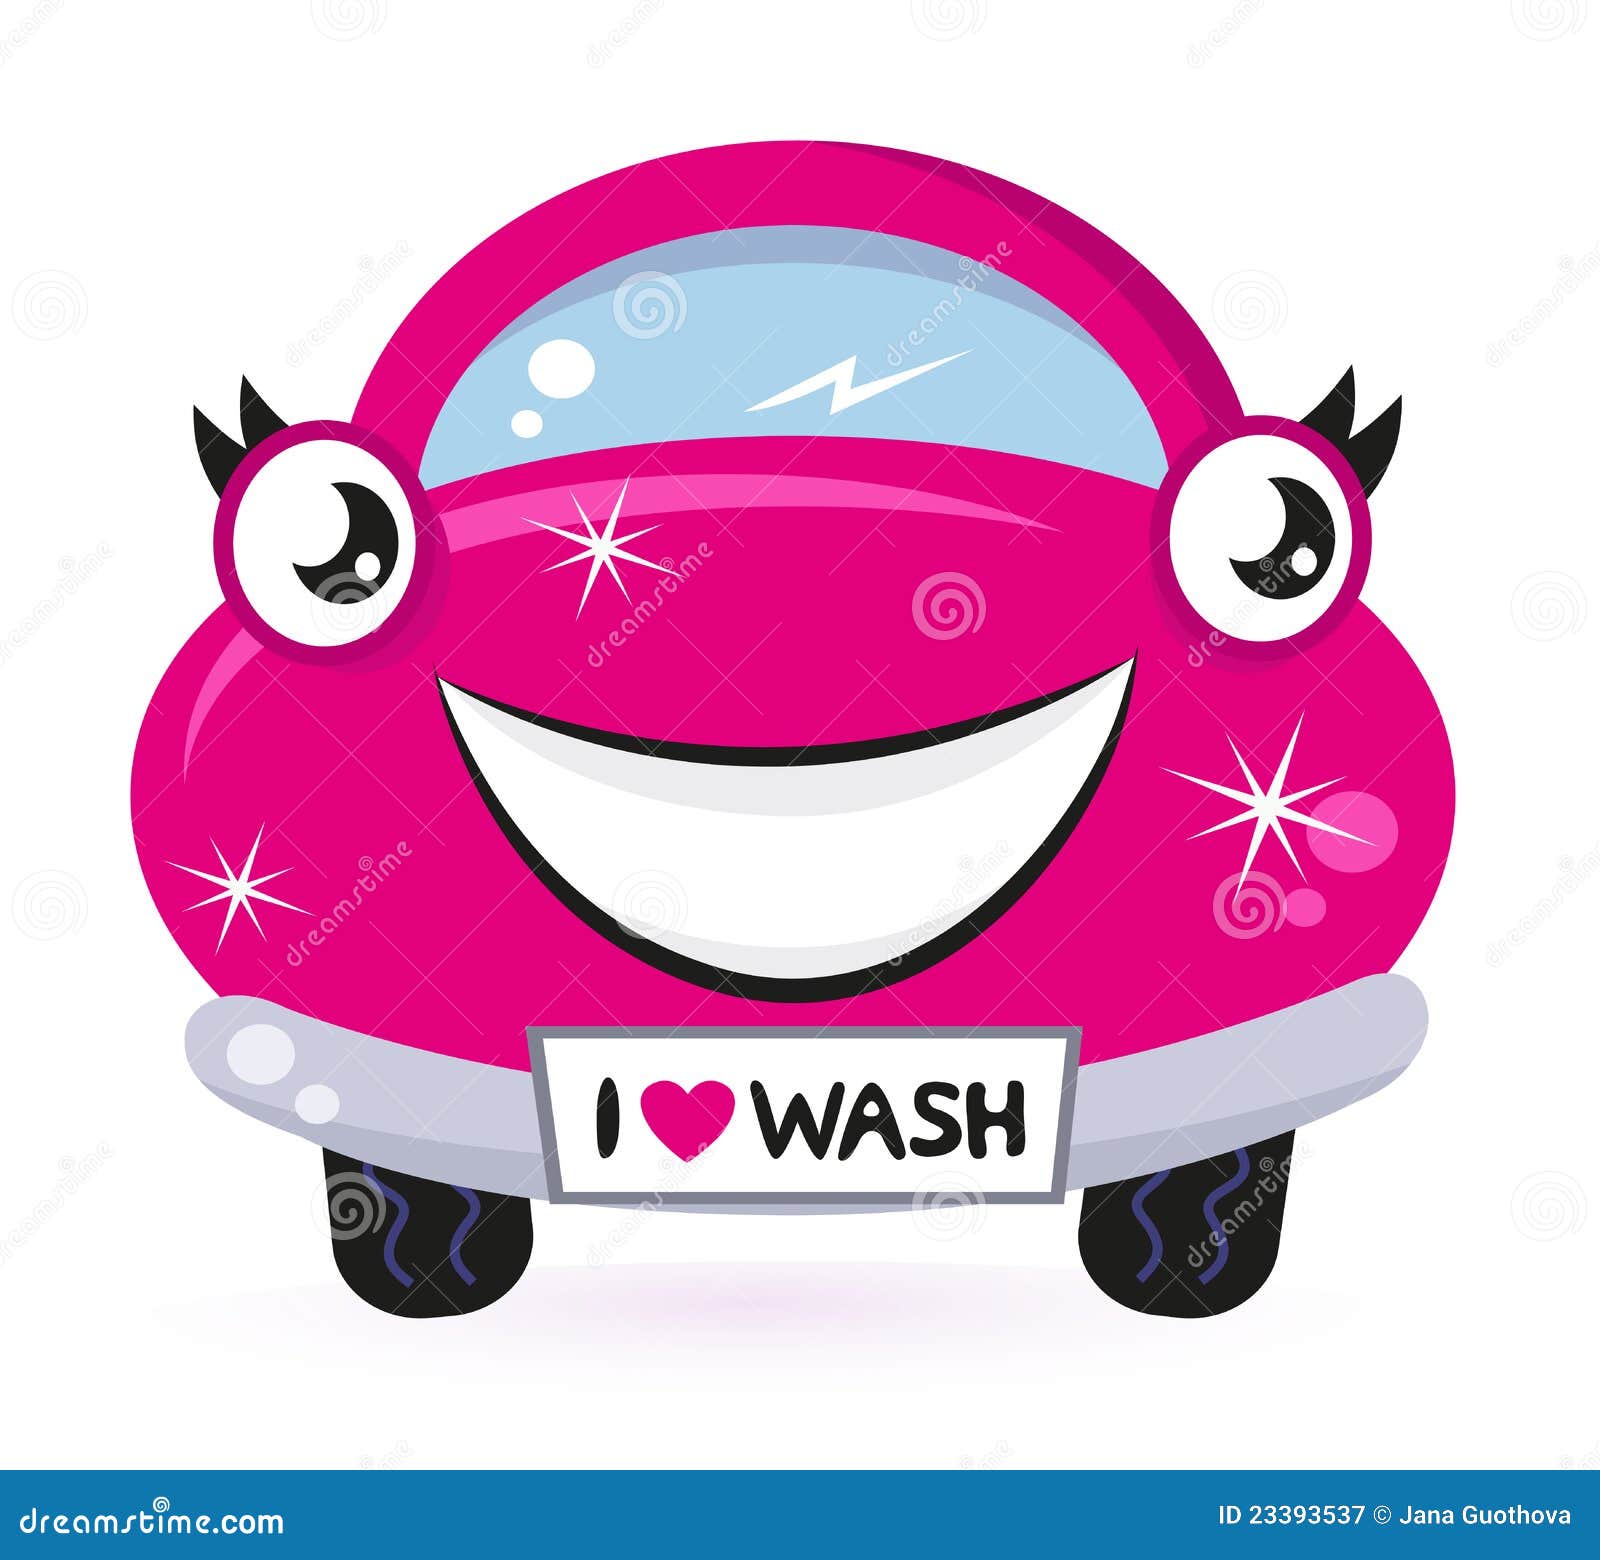 clipart car wash free - photo #24